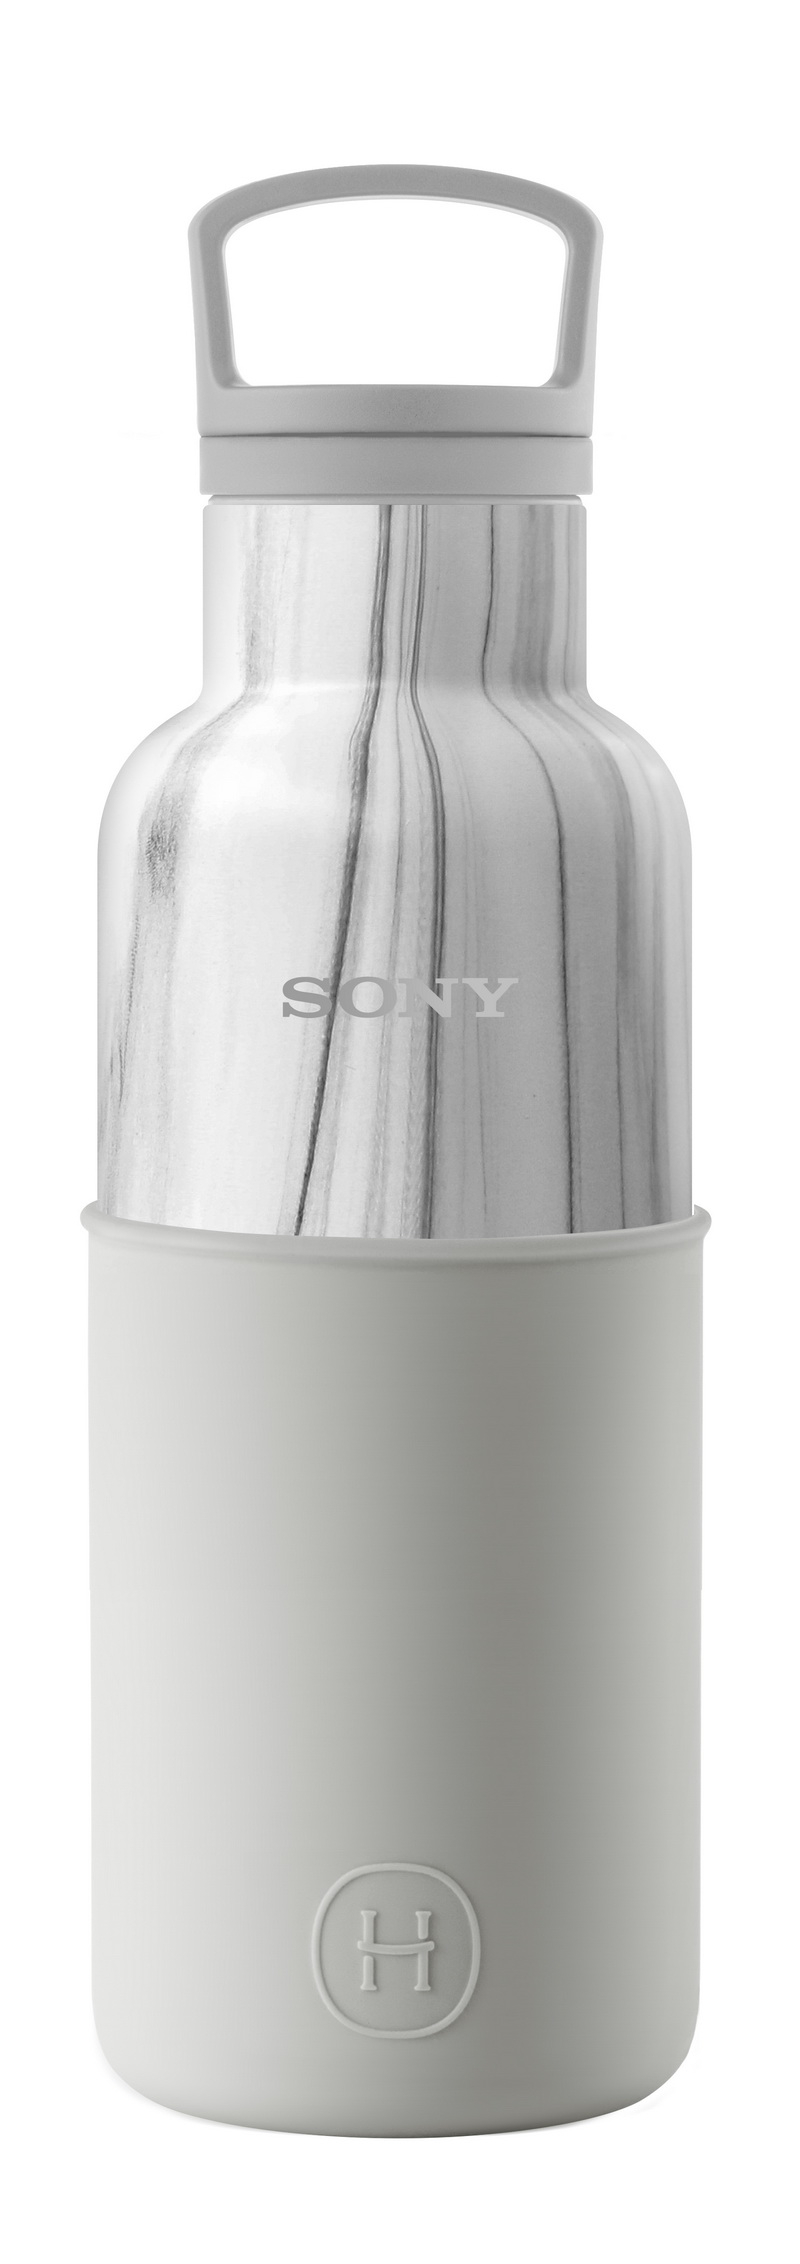 Sony WH-1000XM4 無線主動式降噪耳機 限量靜謐白